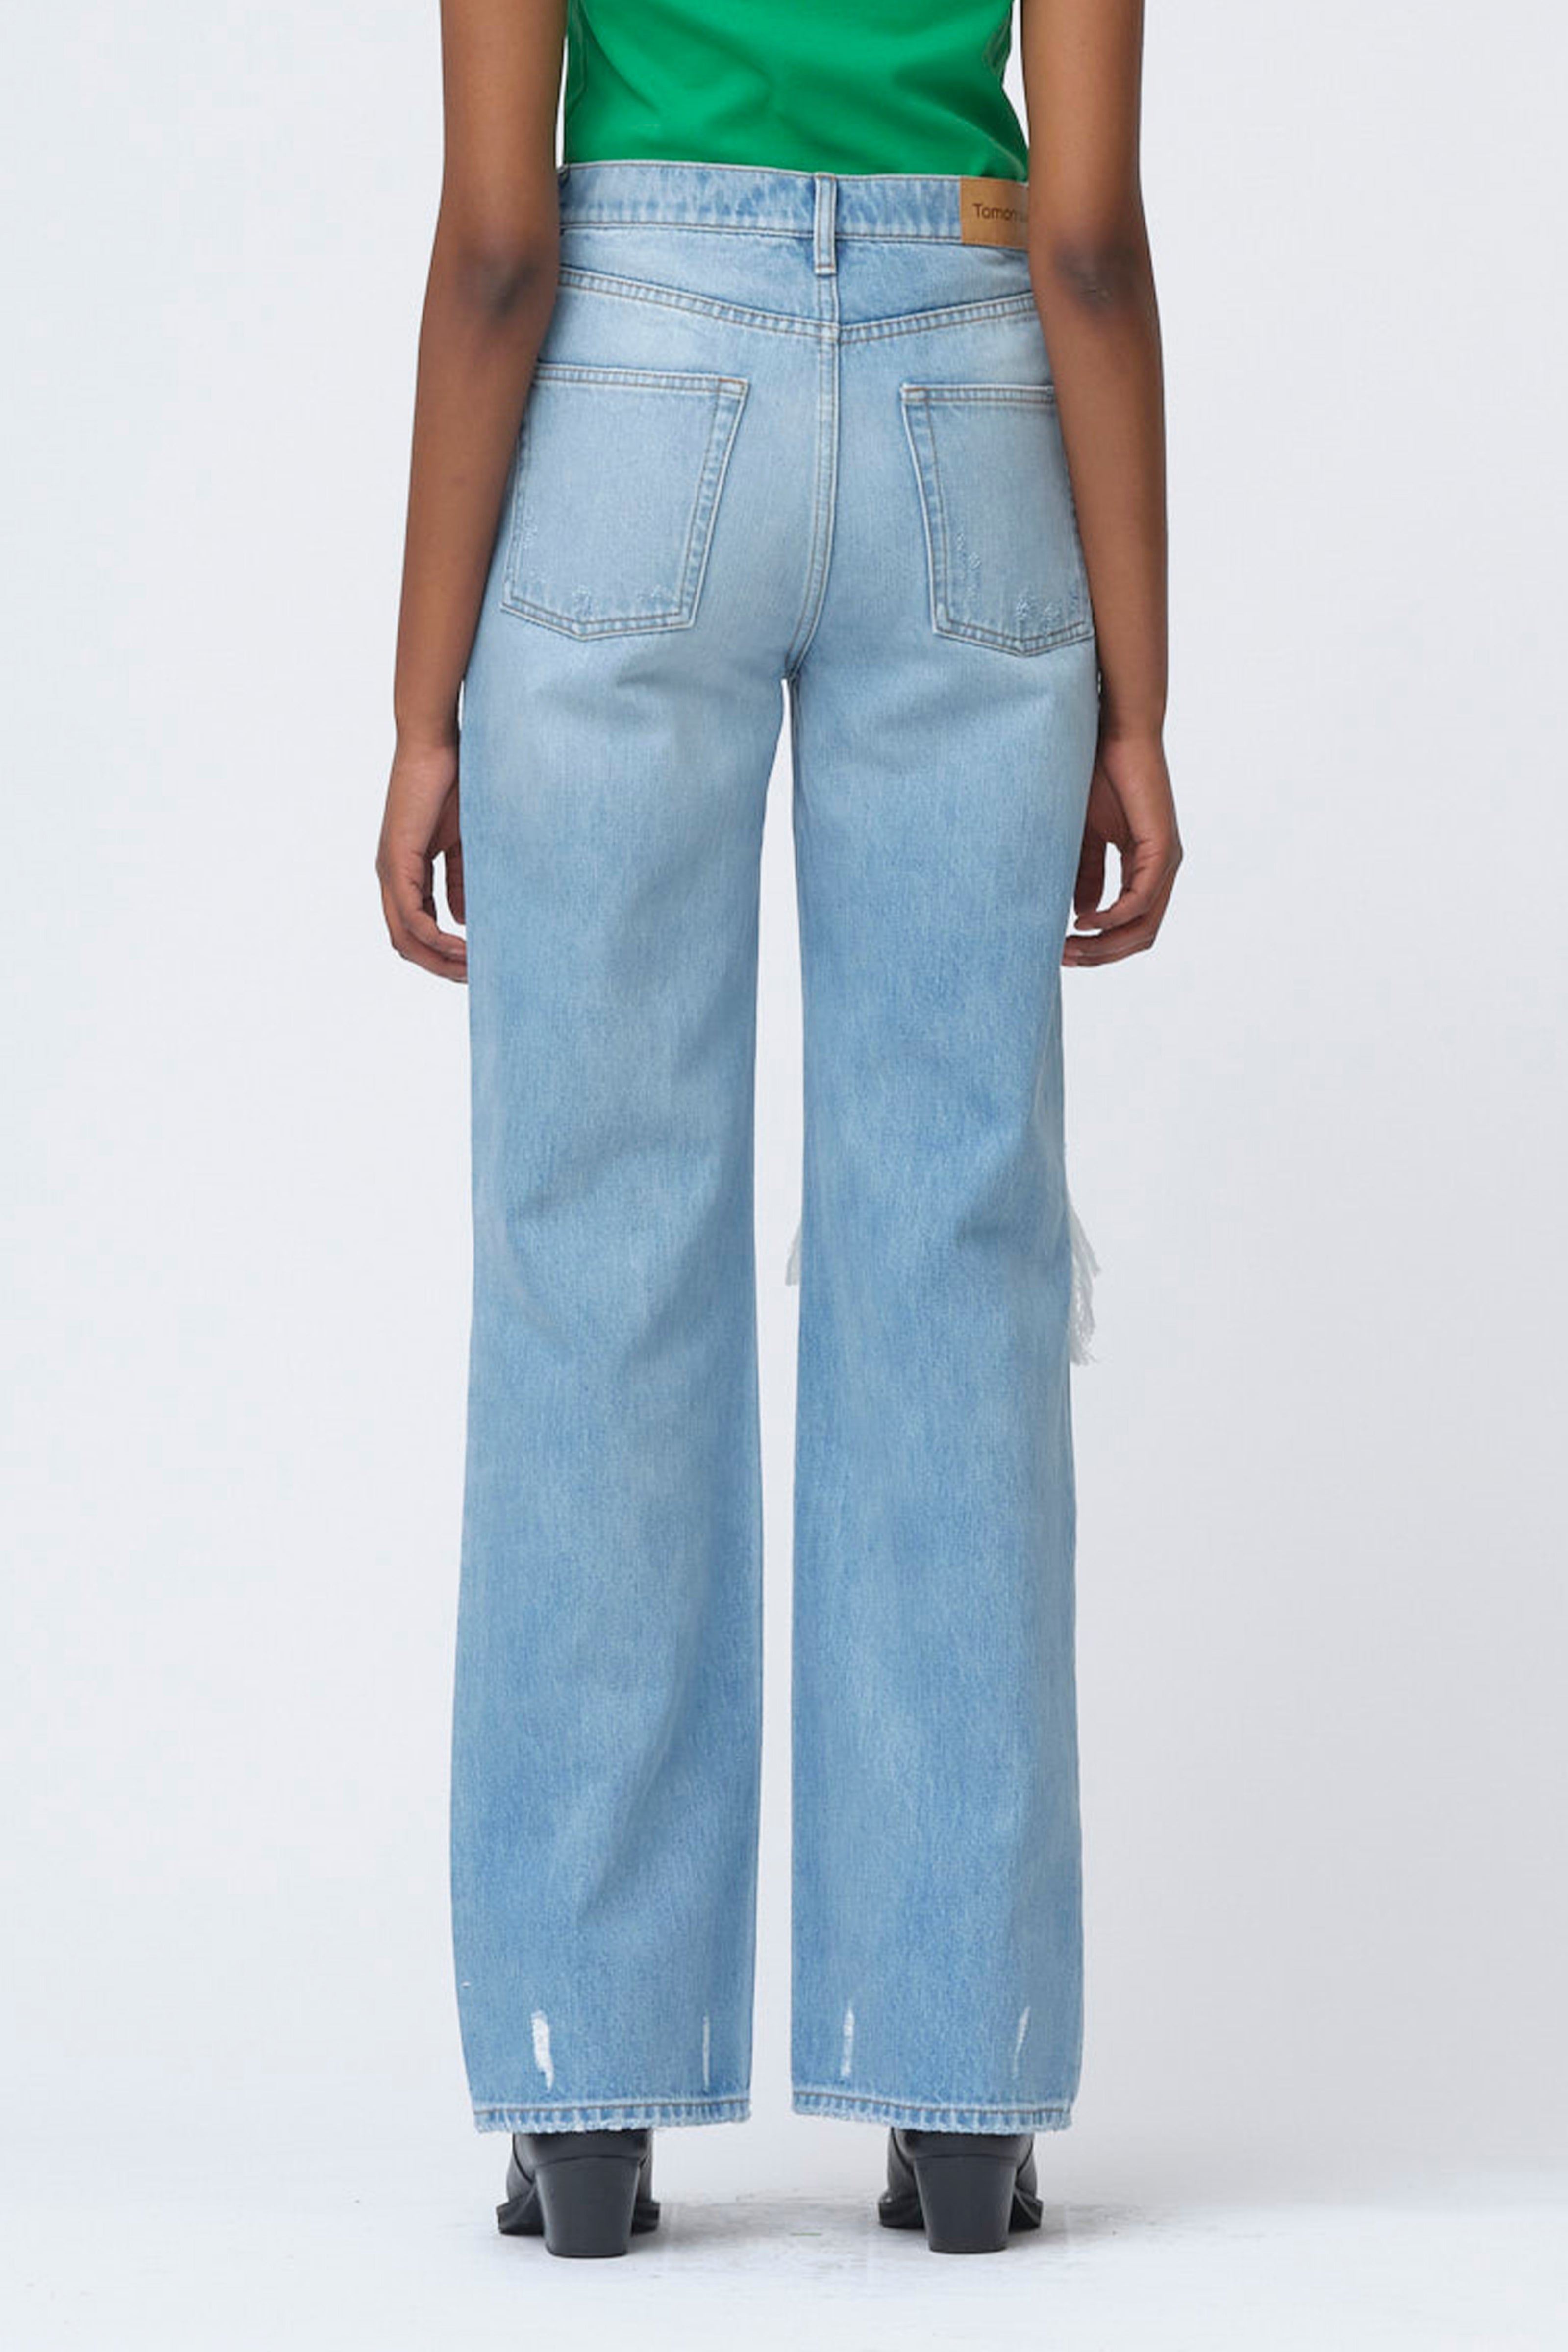 Tomorrow TRW-Brown Straight Jeans Wash San Remo Ribbed Dist. Jeans & Pants 51 Denim Blue